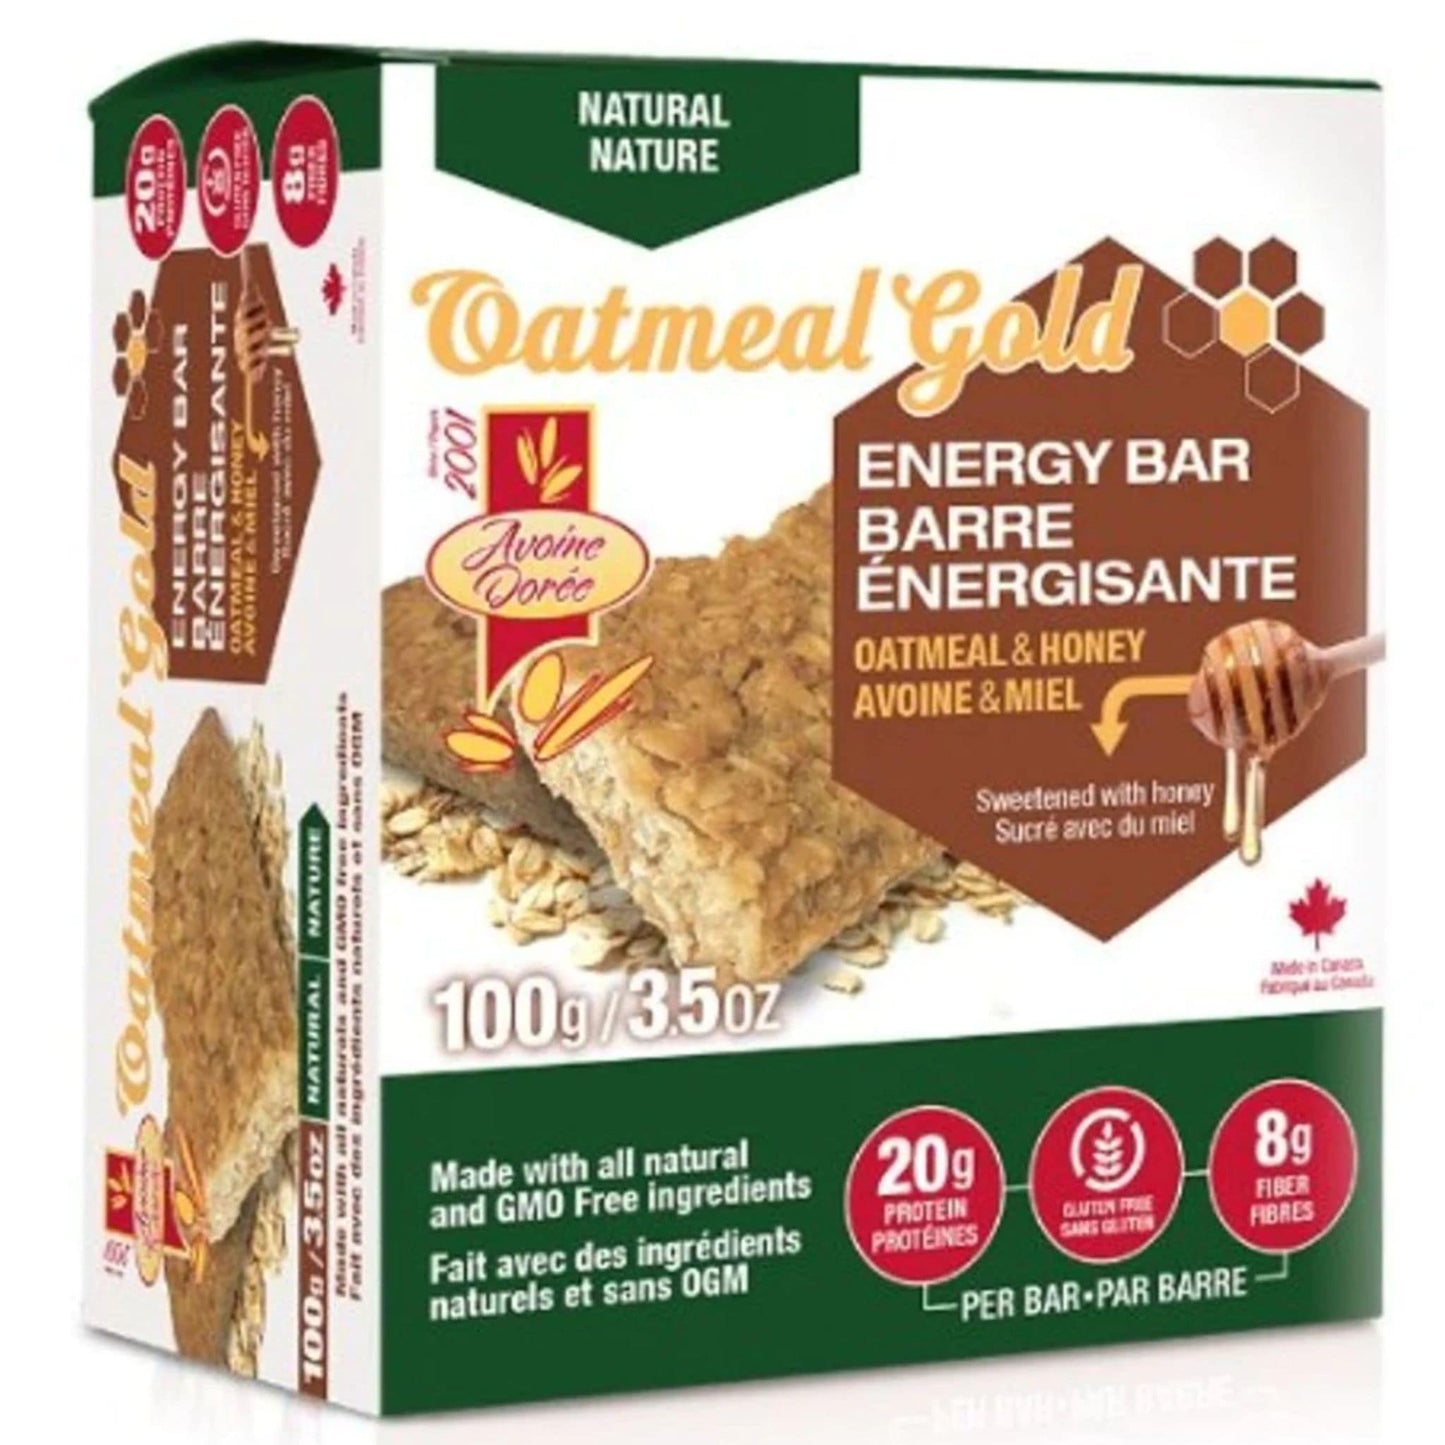 12 x 100g Natural | Oatmeal Gold All Natural Energy Bar